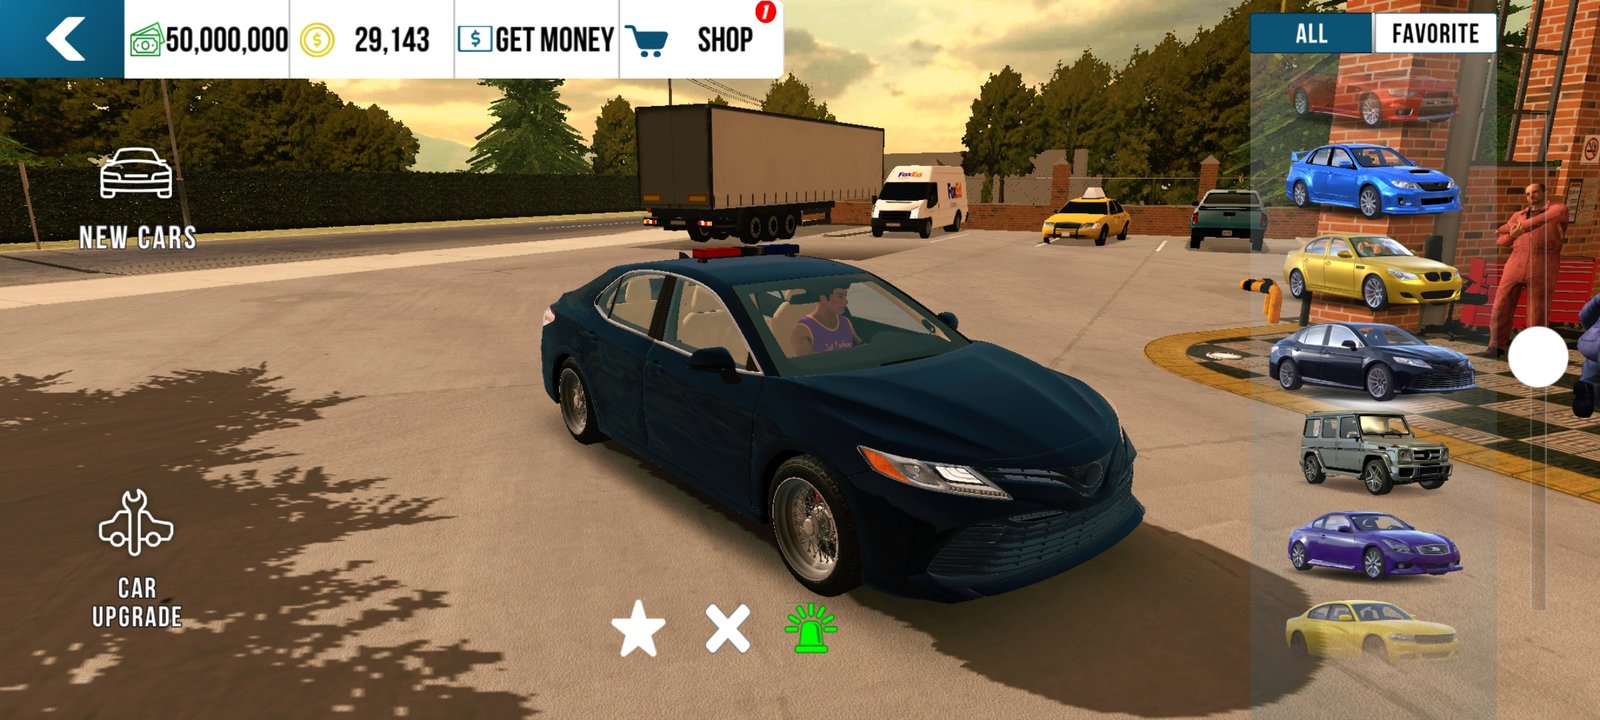 Car Parking Multiplayer Mod APK (Money/Unlocked) 4.8.12.7 Download